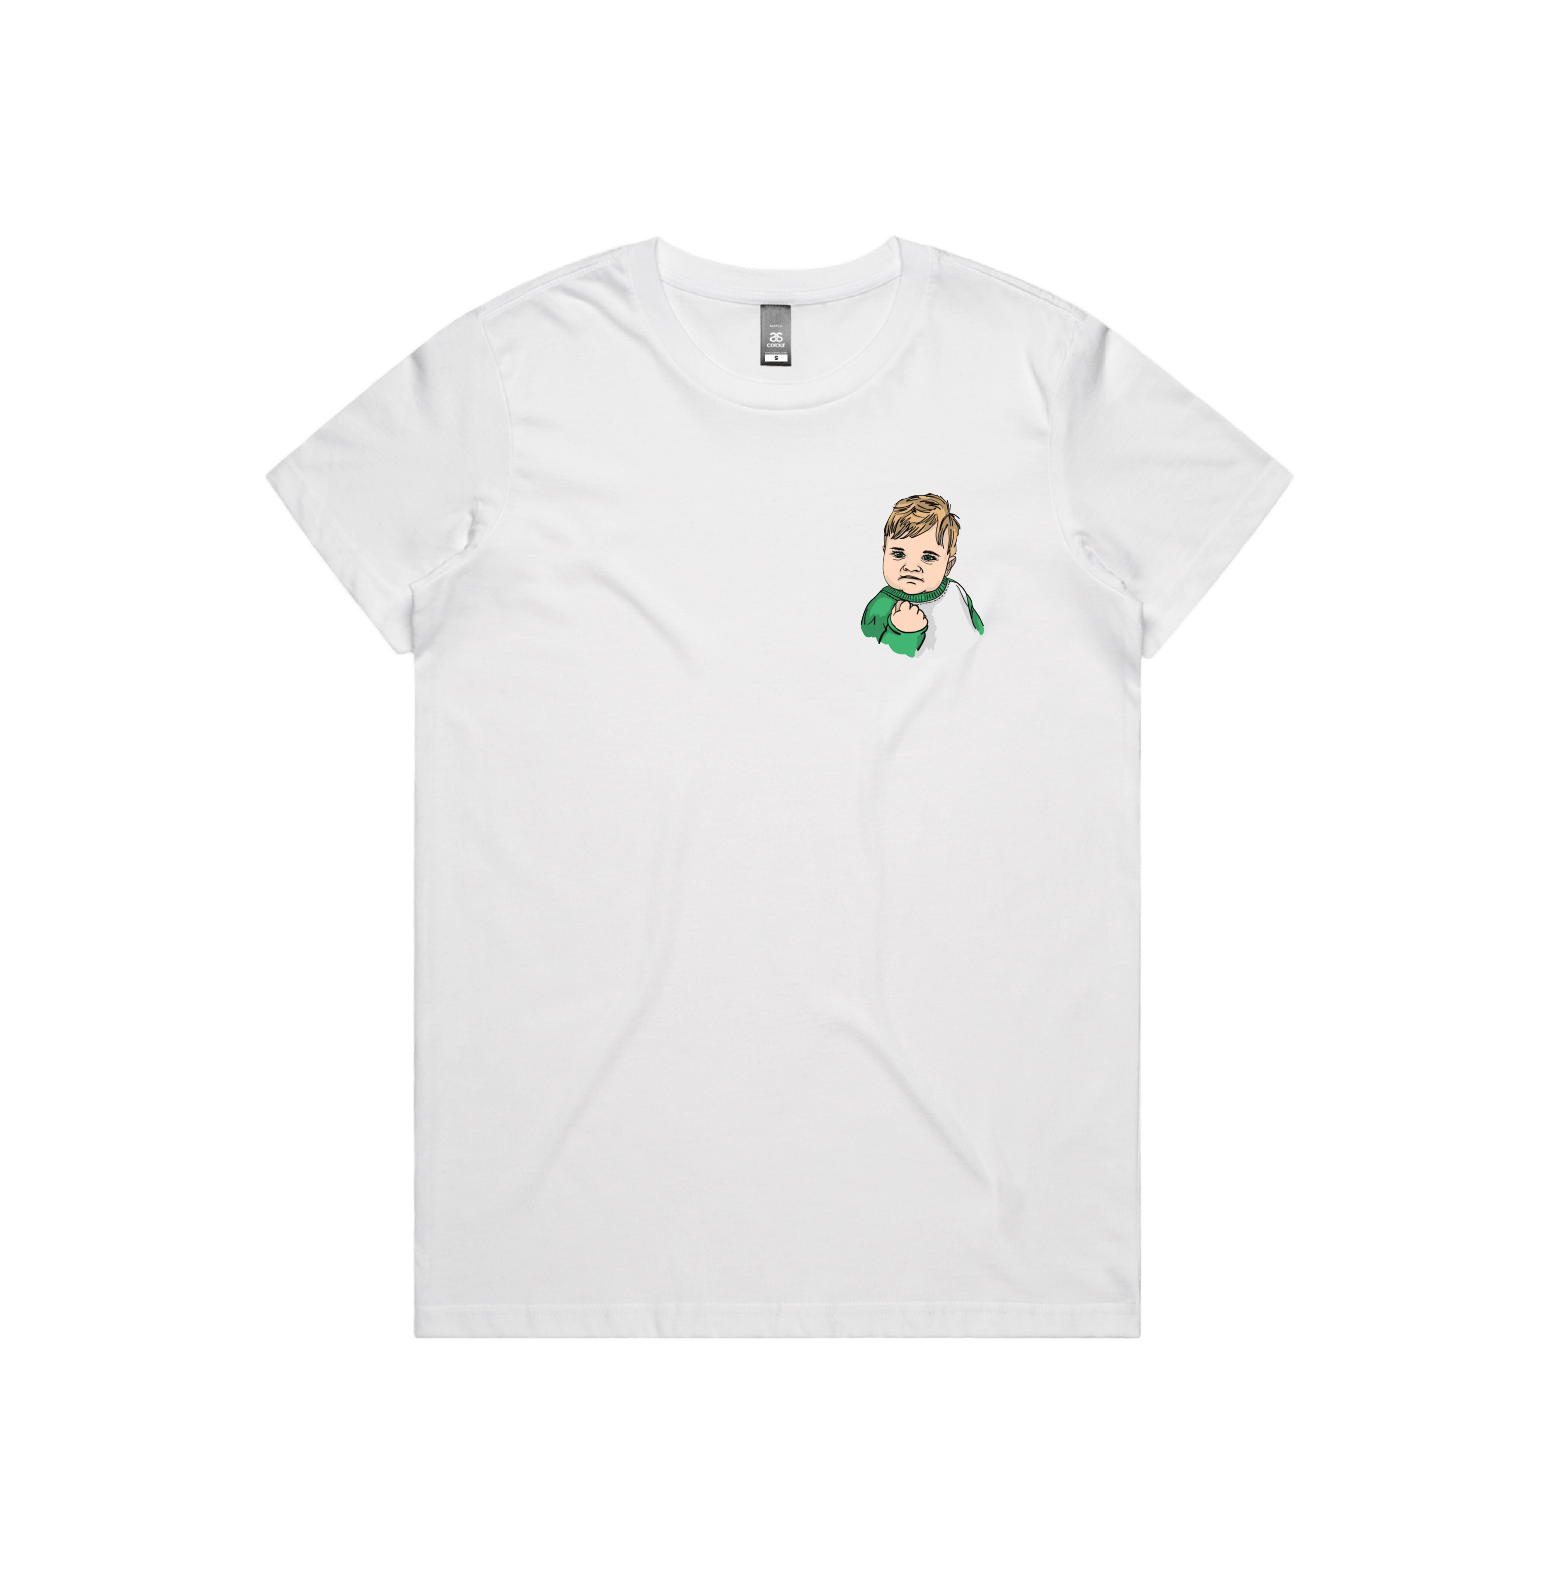 XS / White / Small Front Design Success Kid ✊ - Women's T Shirt